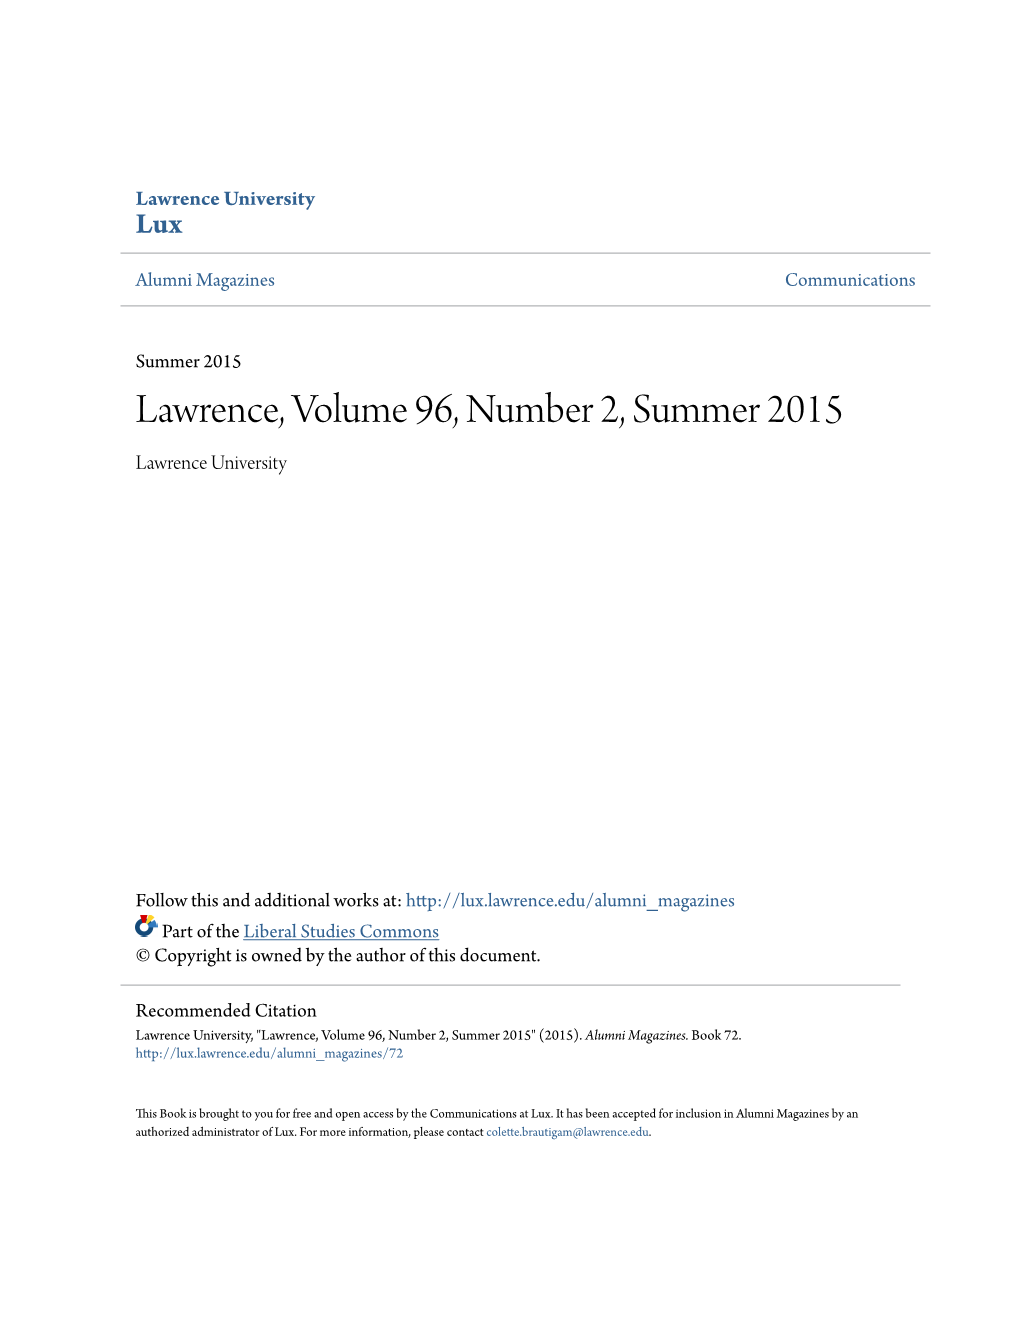 Lawrence, Volume 96, Number 2, Summer 2015 Lawrence University